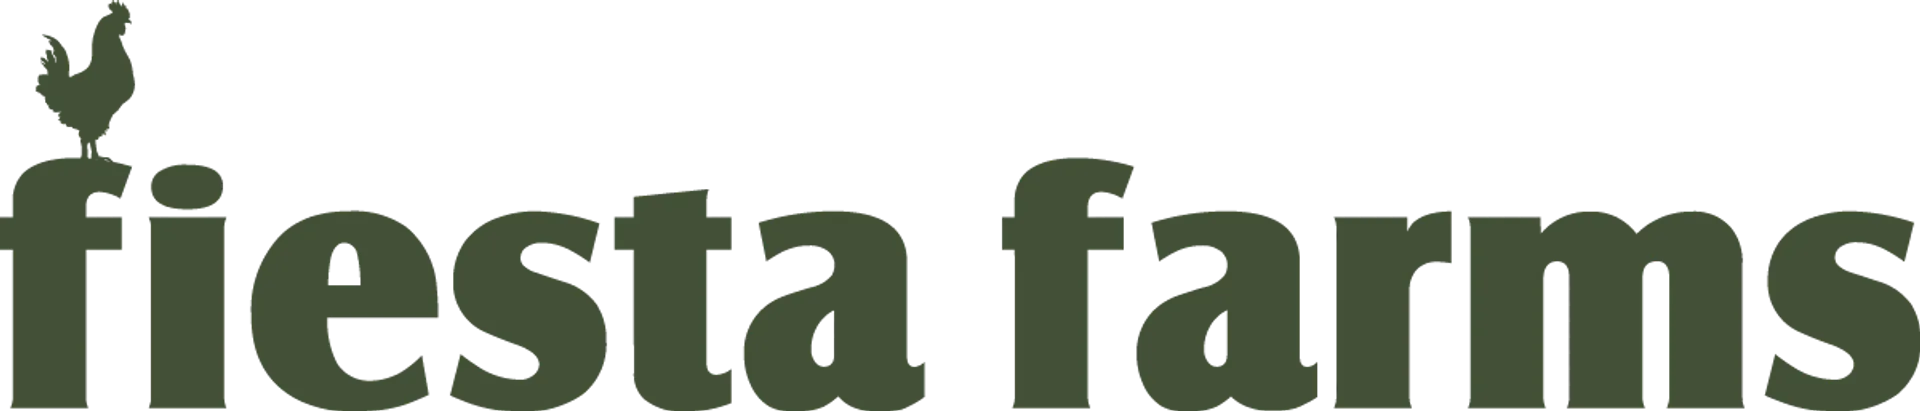 FIESTA FARMS logo